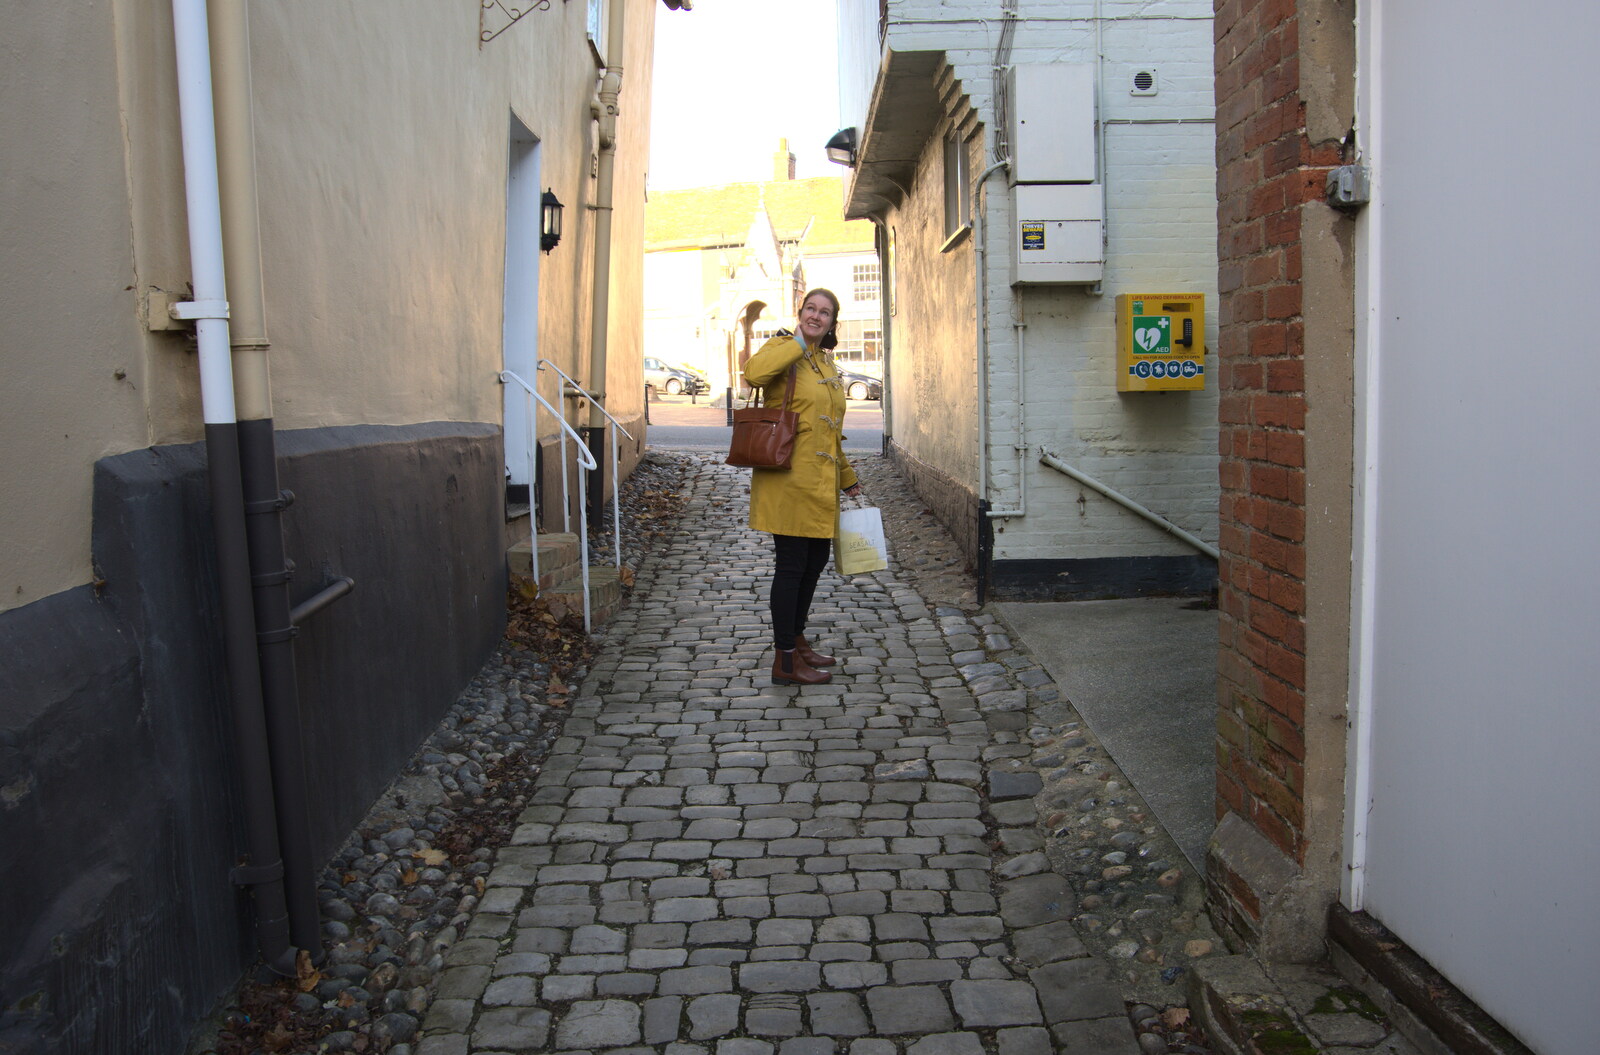 Isobel on the passage up to Seckford Street from Isobel's Birthday, Woodbridge, Suffolk - 2nd November 2020